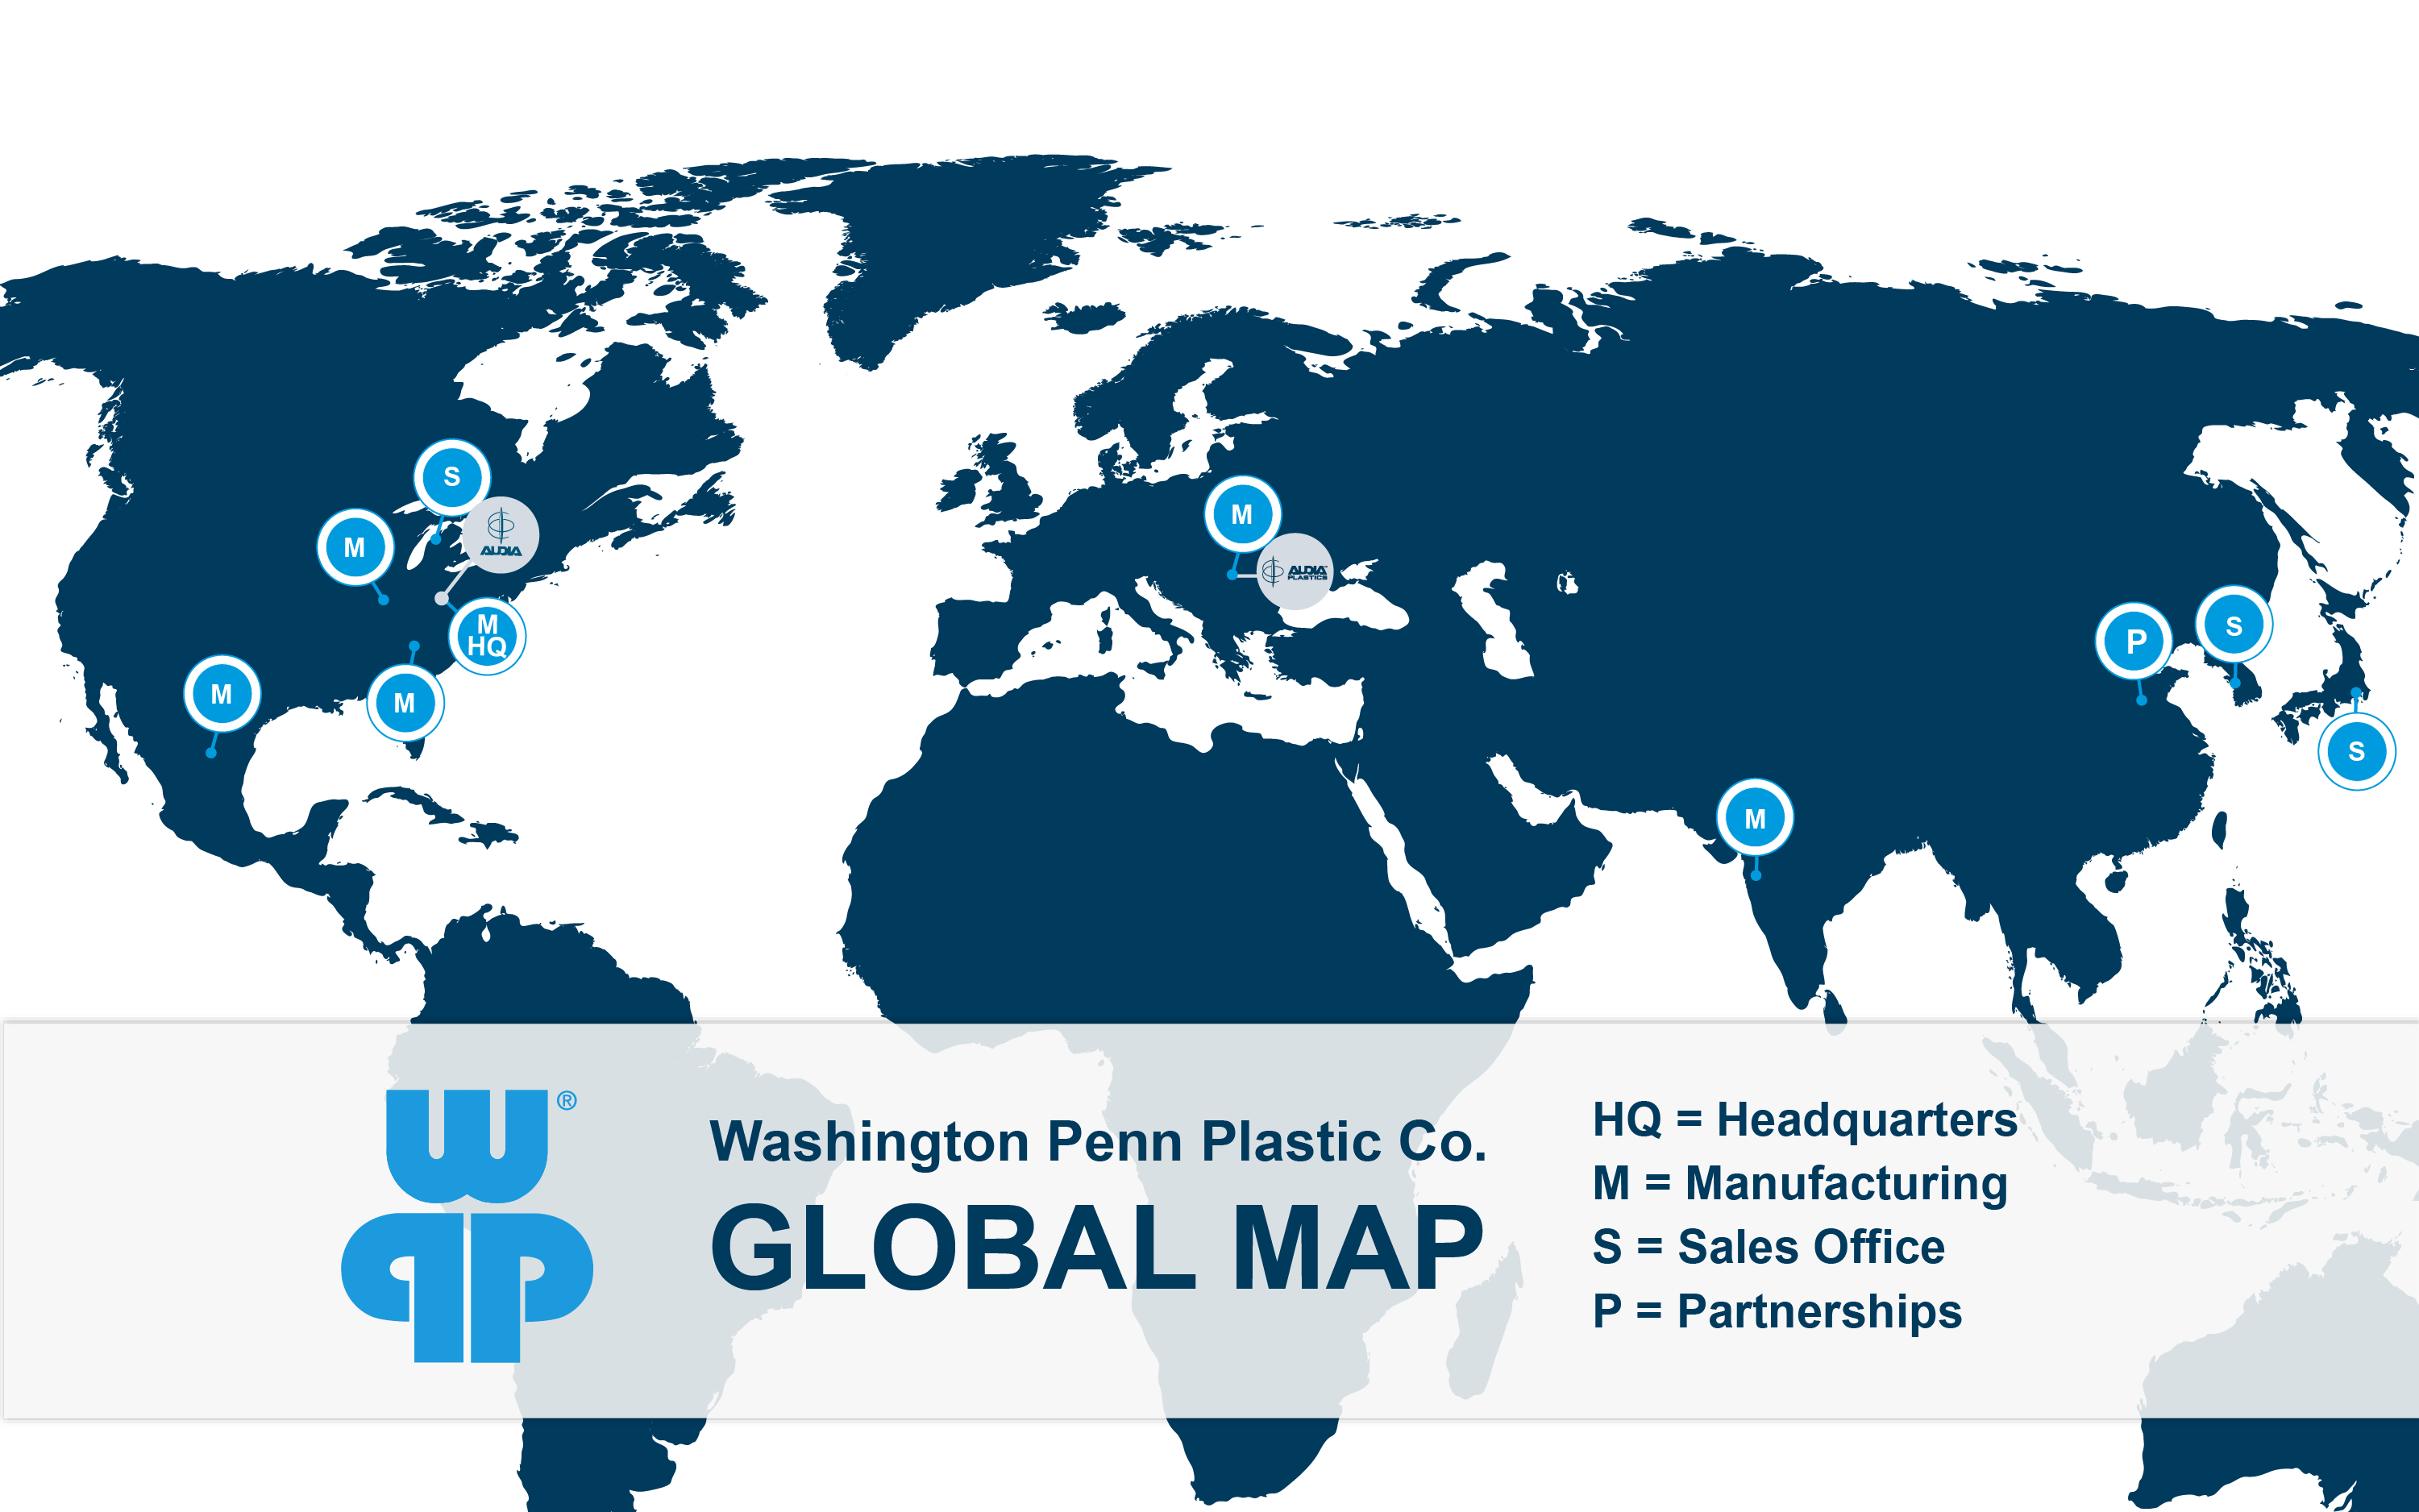 Wpp Global Map L 01